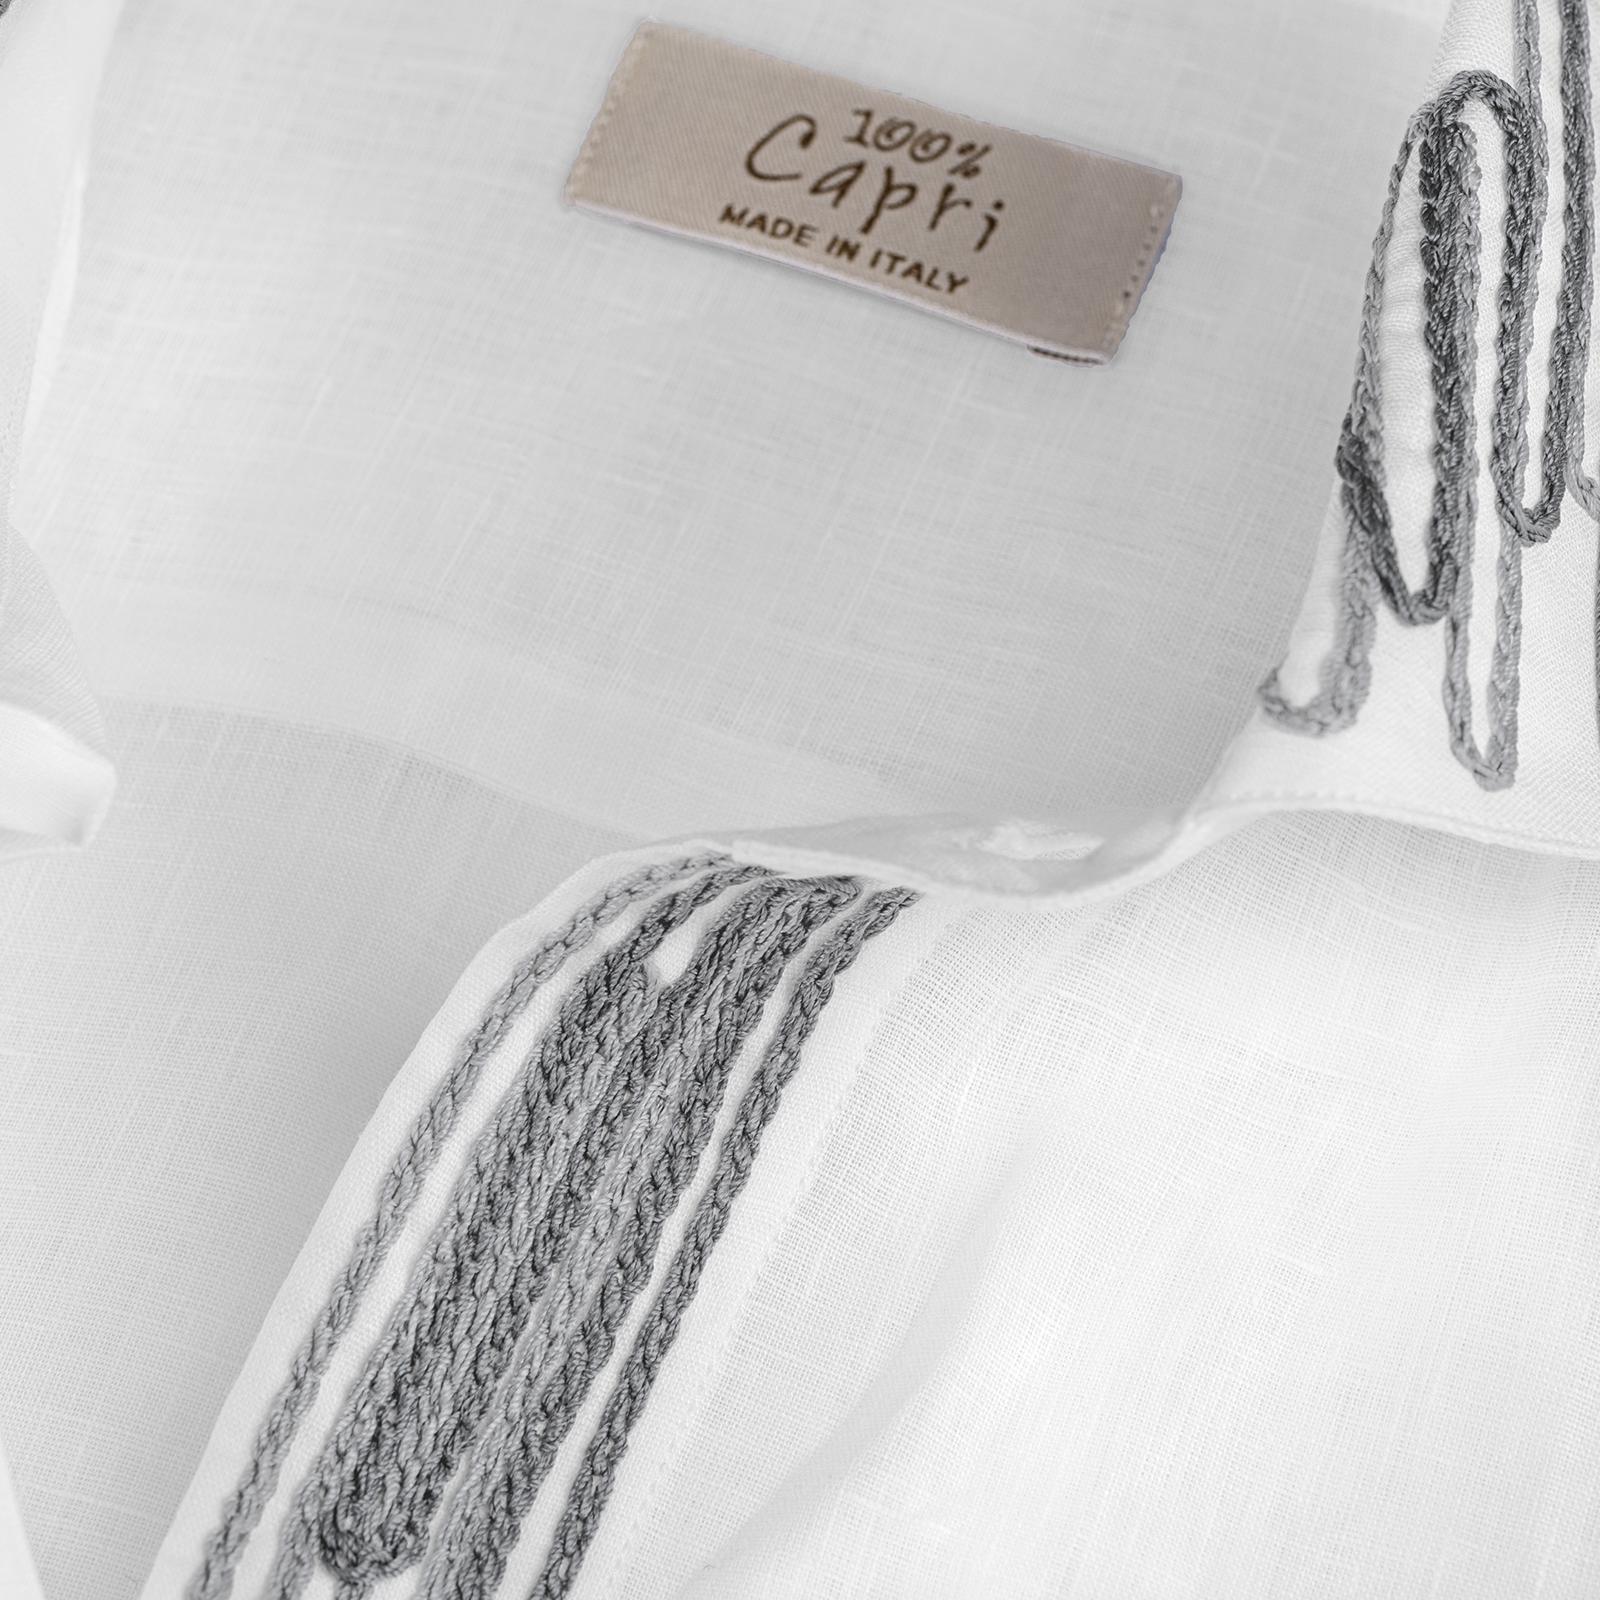 Camicia New Onda details 100% Capri